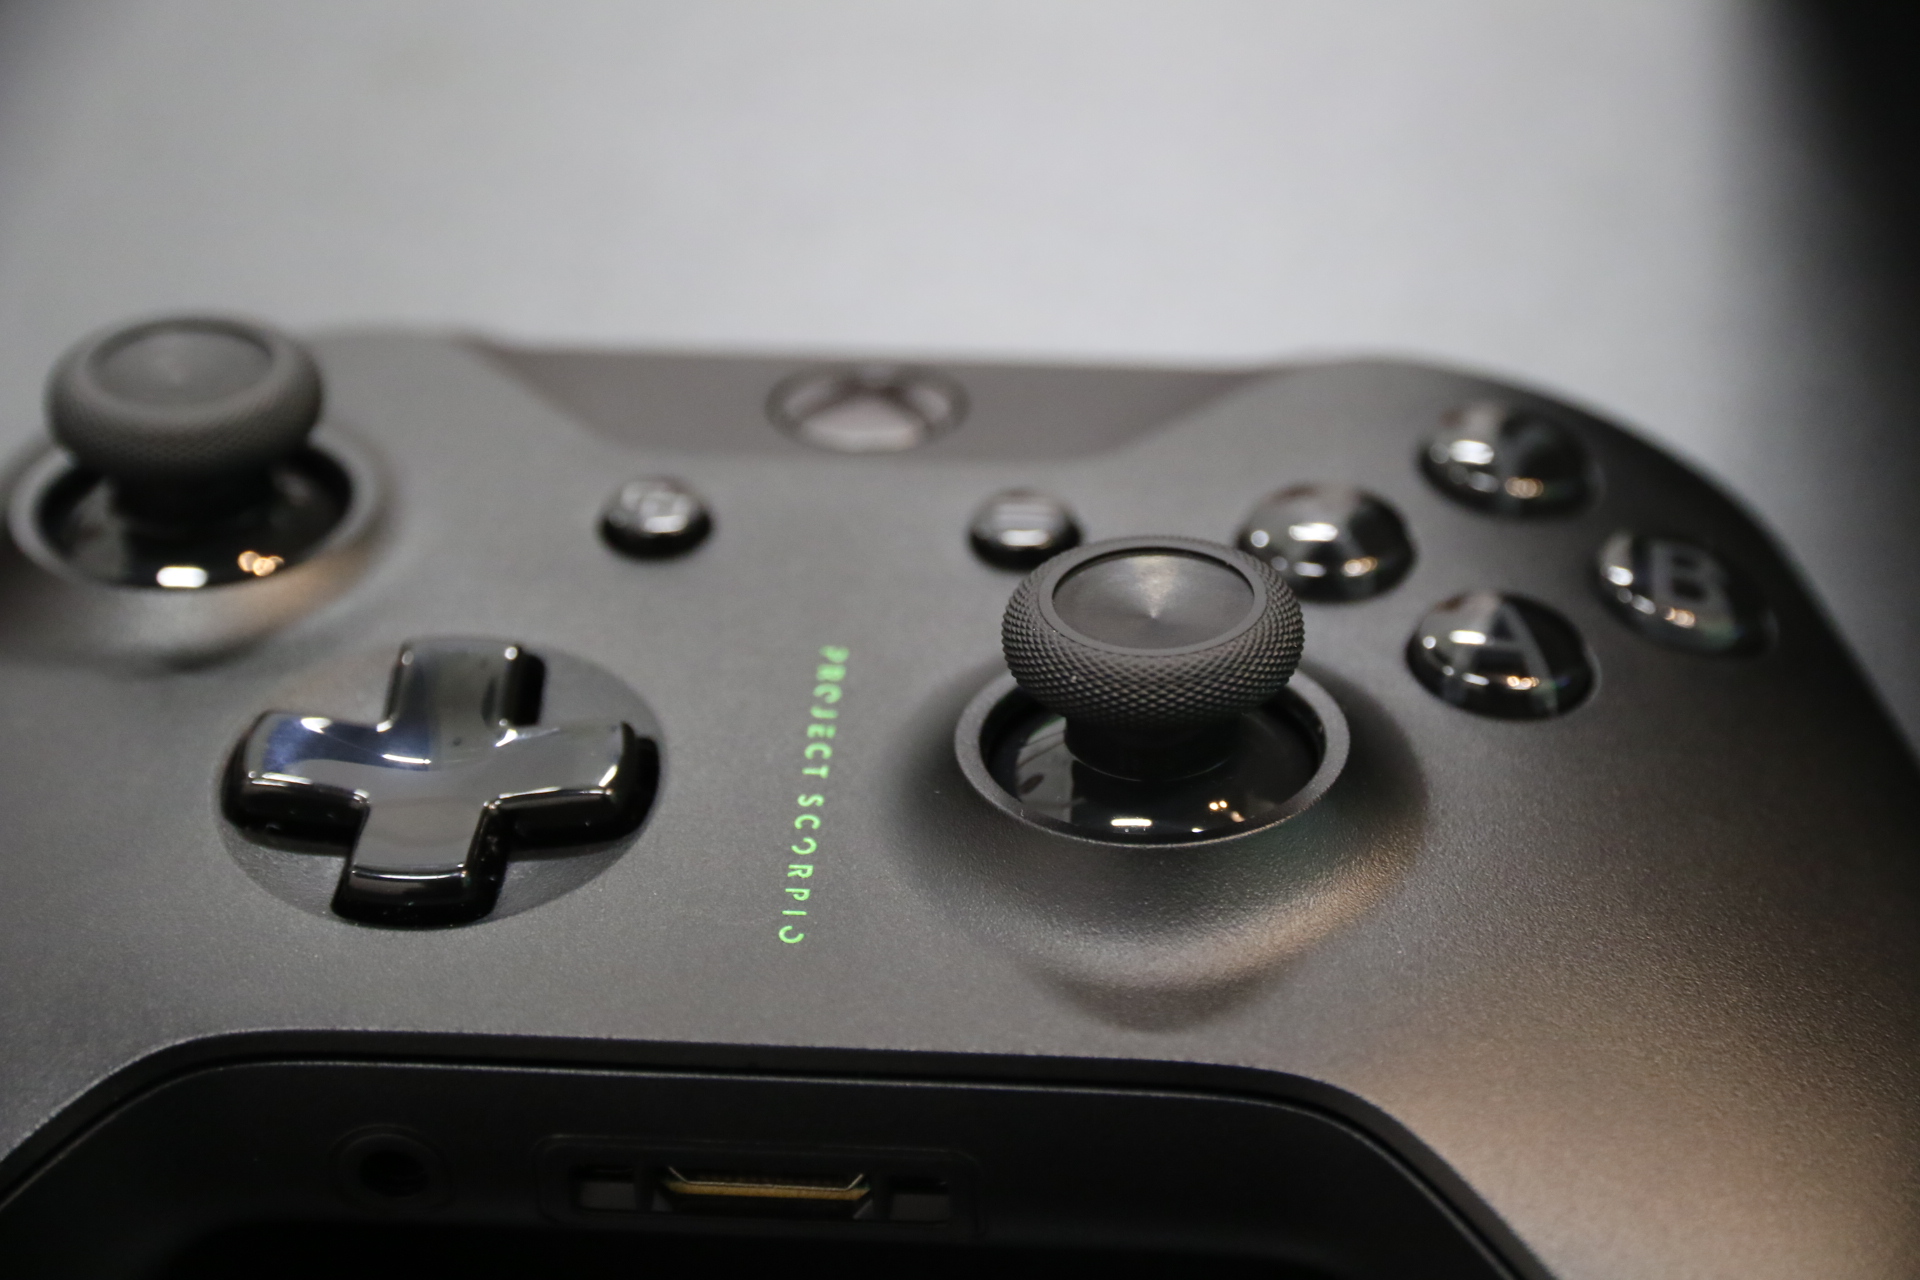 Xbox One X Project Scorpio Controller